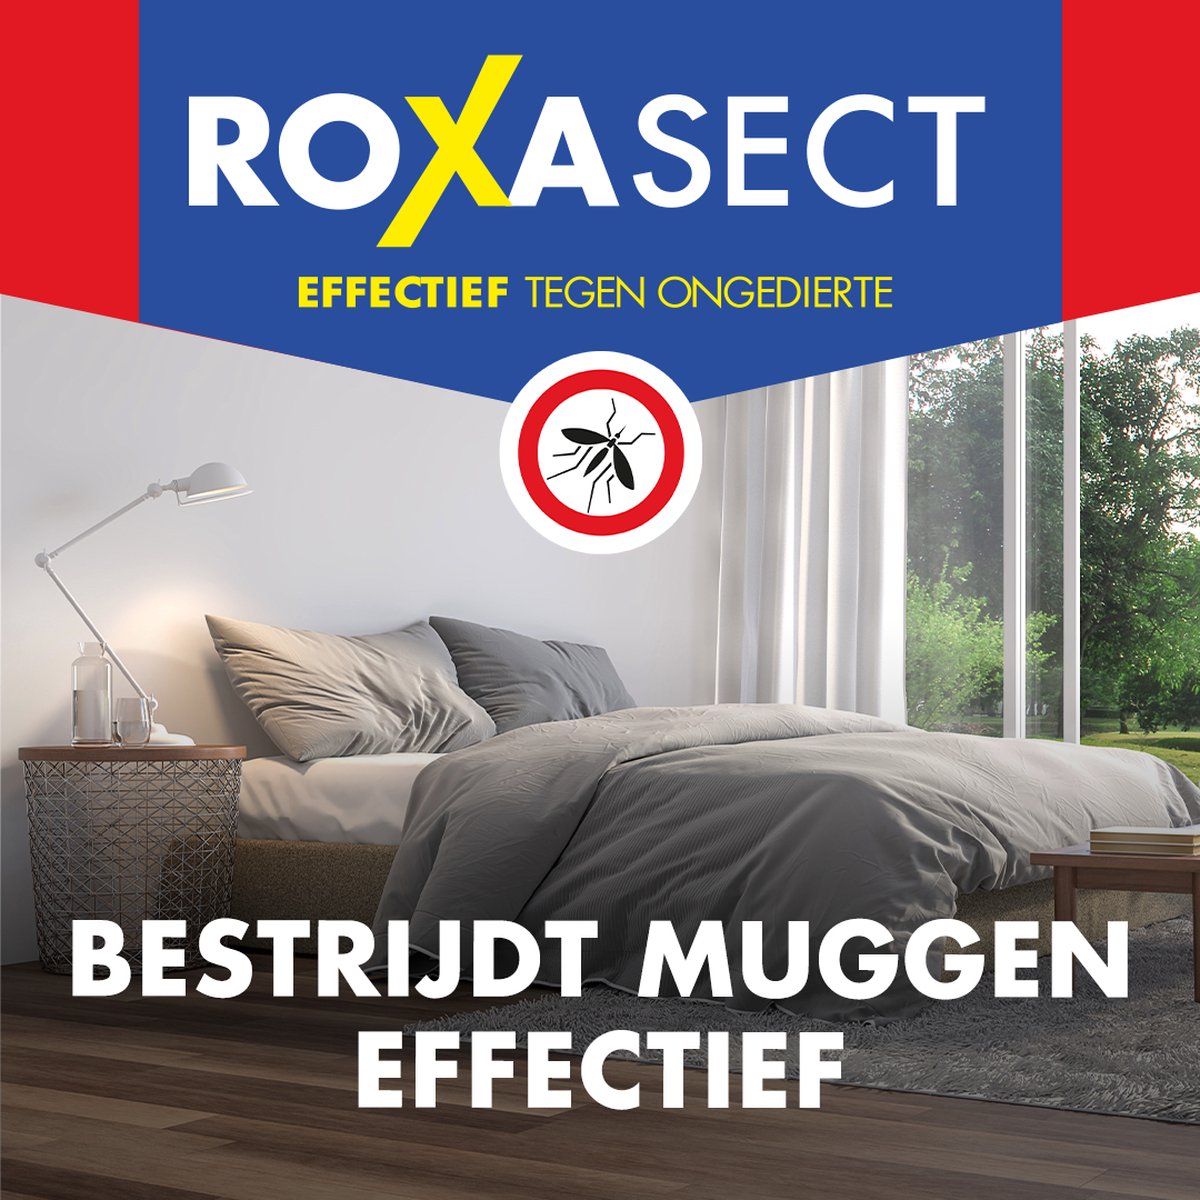 Roxasect Anti-Mug Muggenstekker - Voordeelverpakking - 2 stuks | bol.com